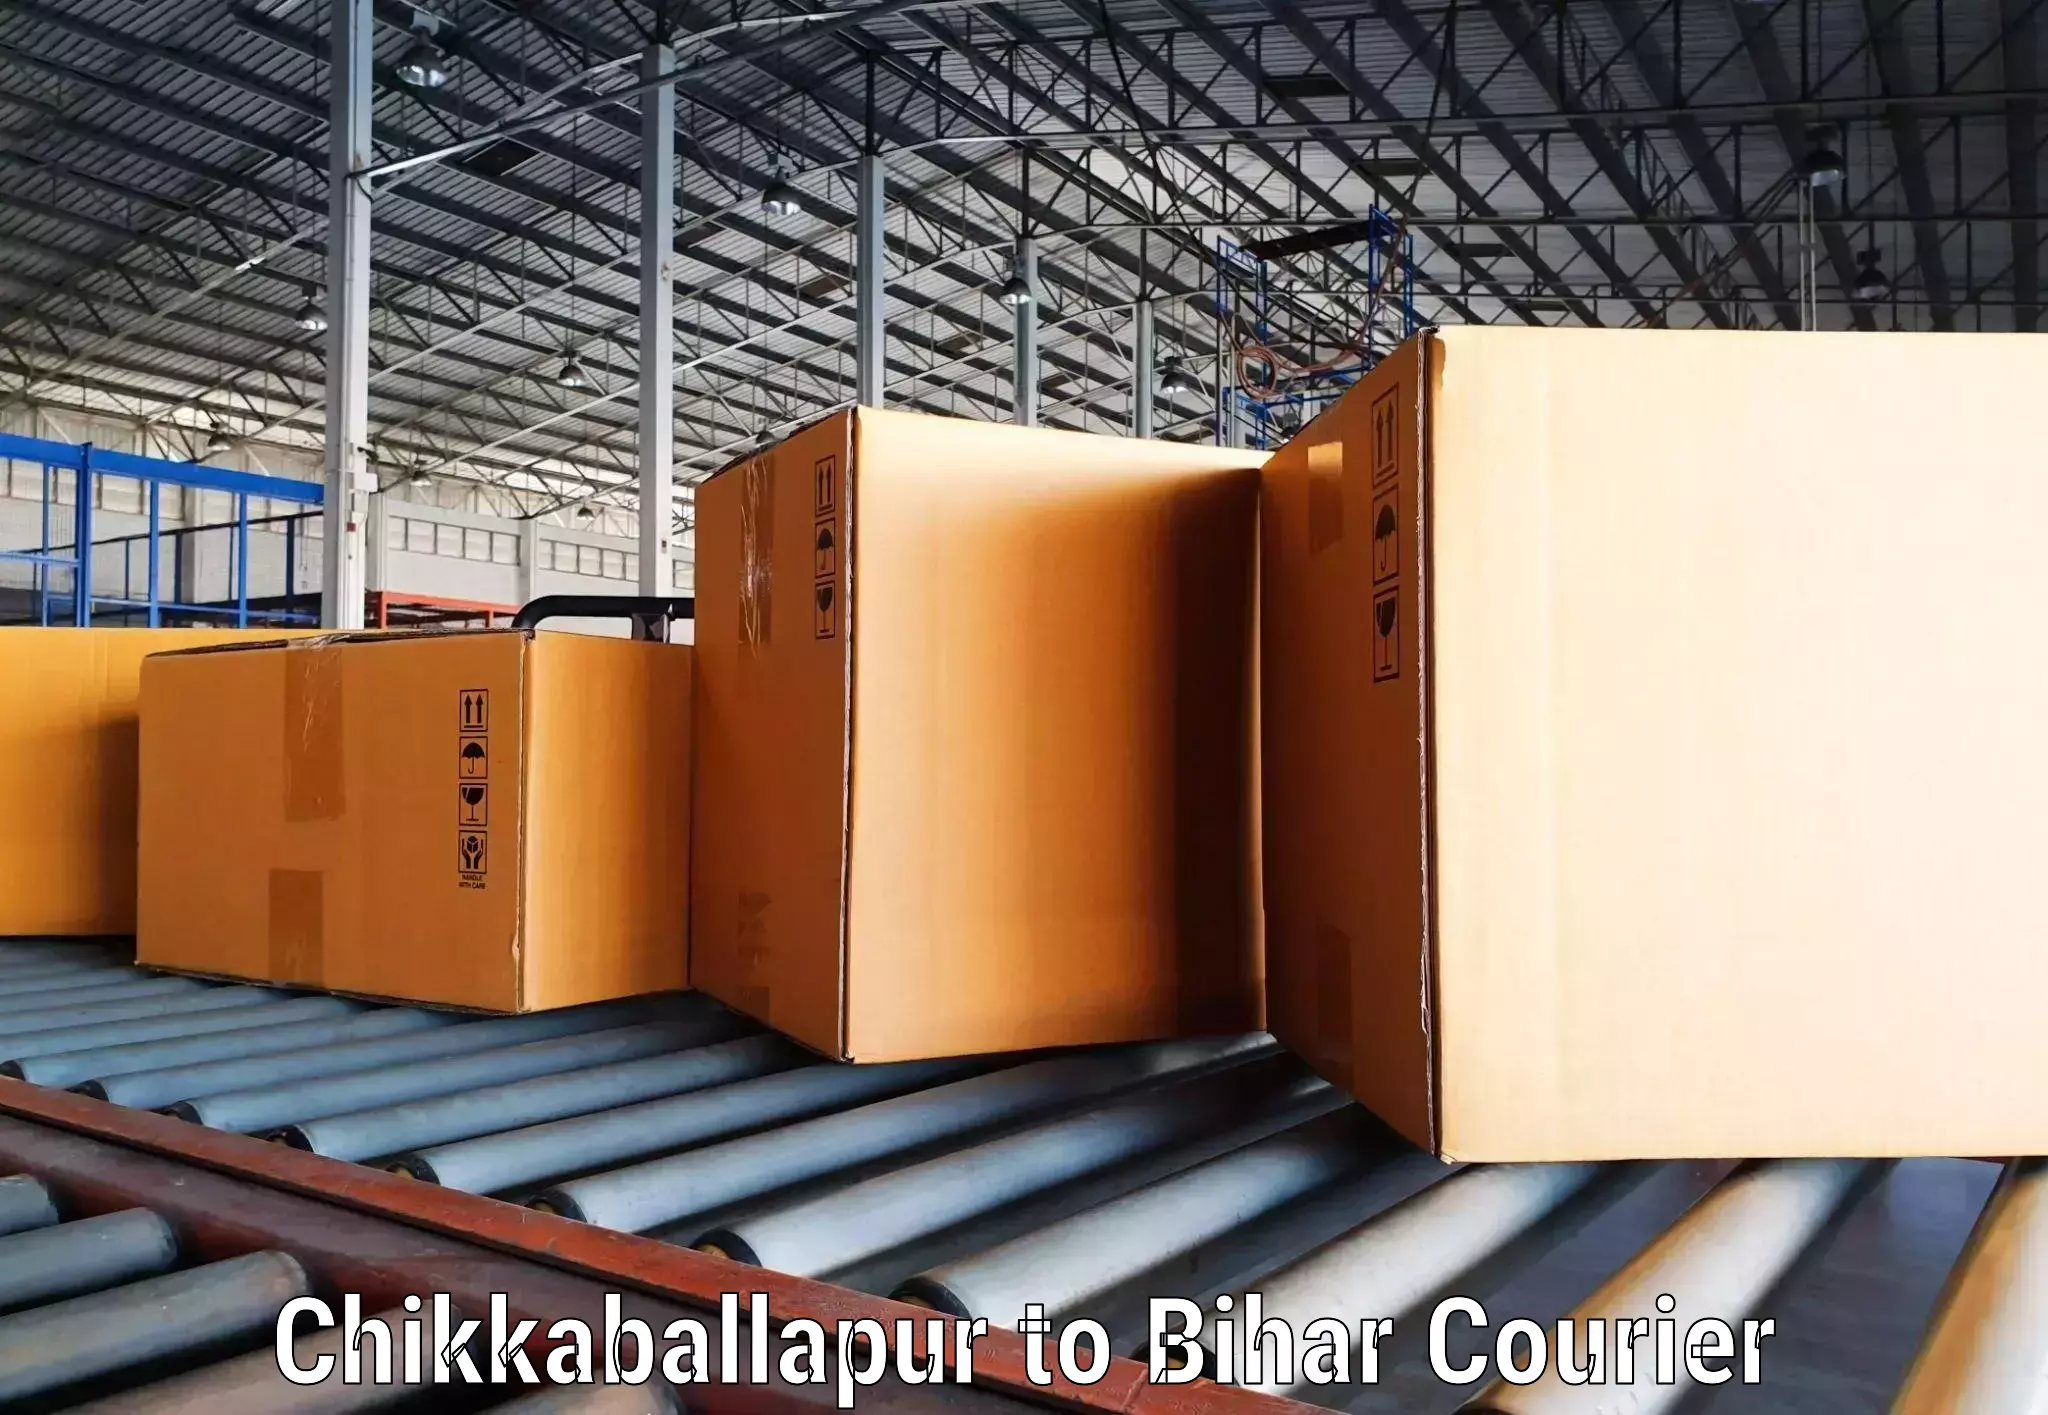 Global logistics network Chikkaballapur to Phulparas